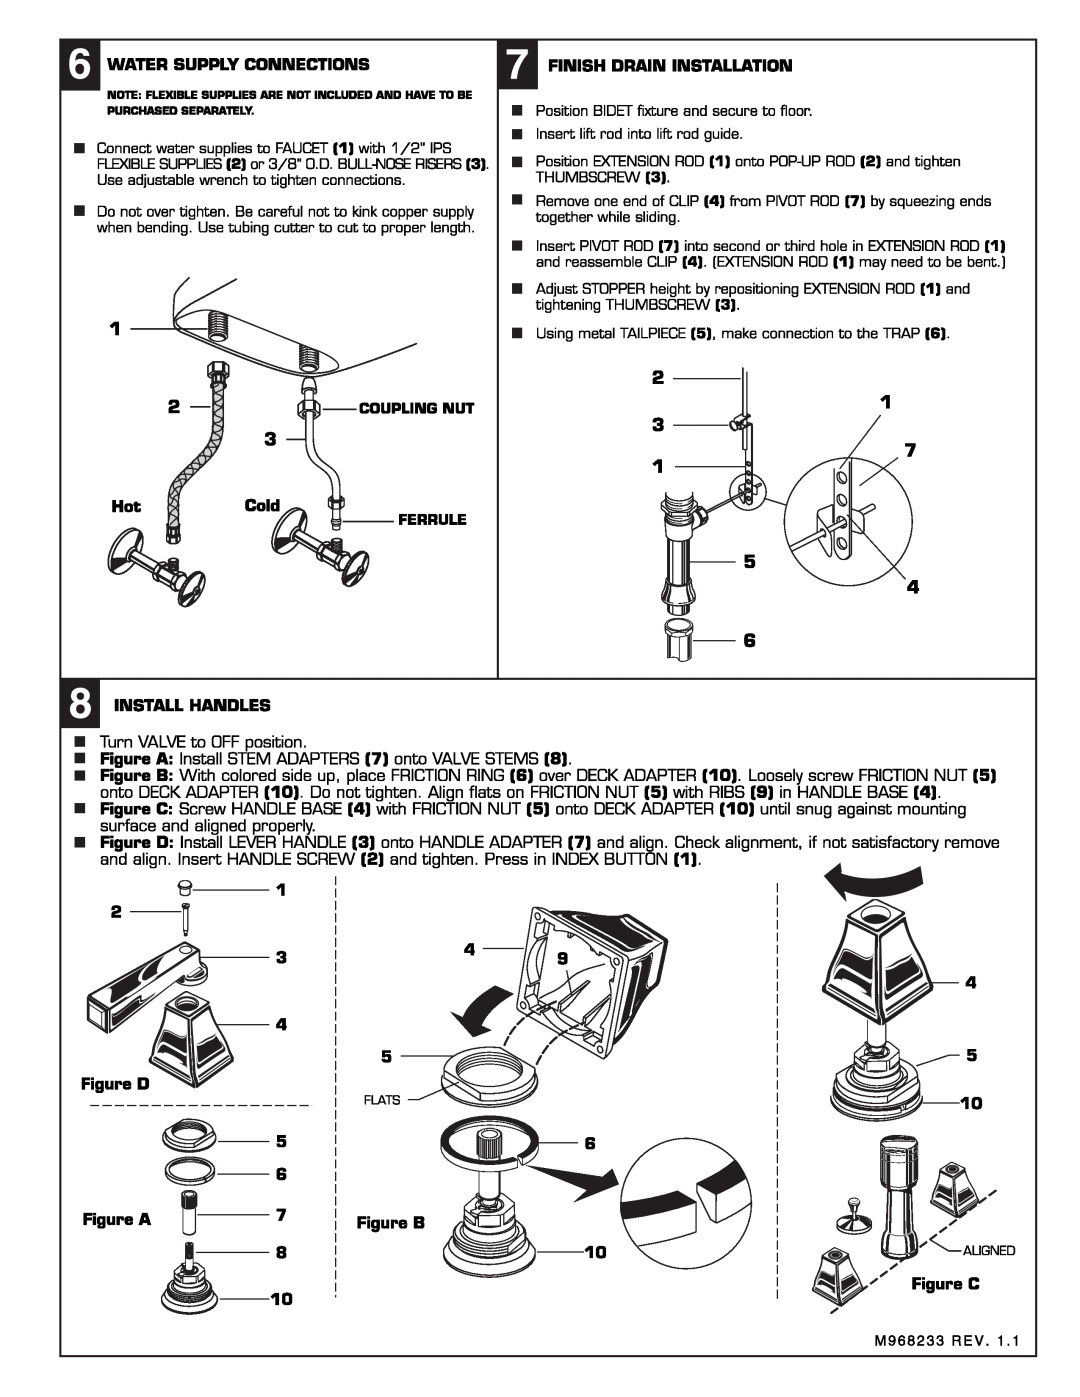 American Standard 2555.400 installation instructions 